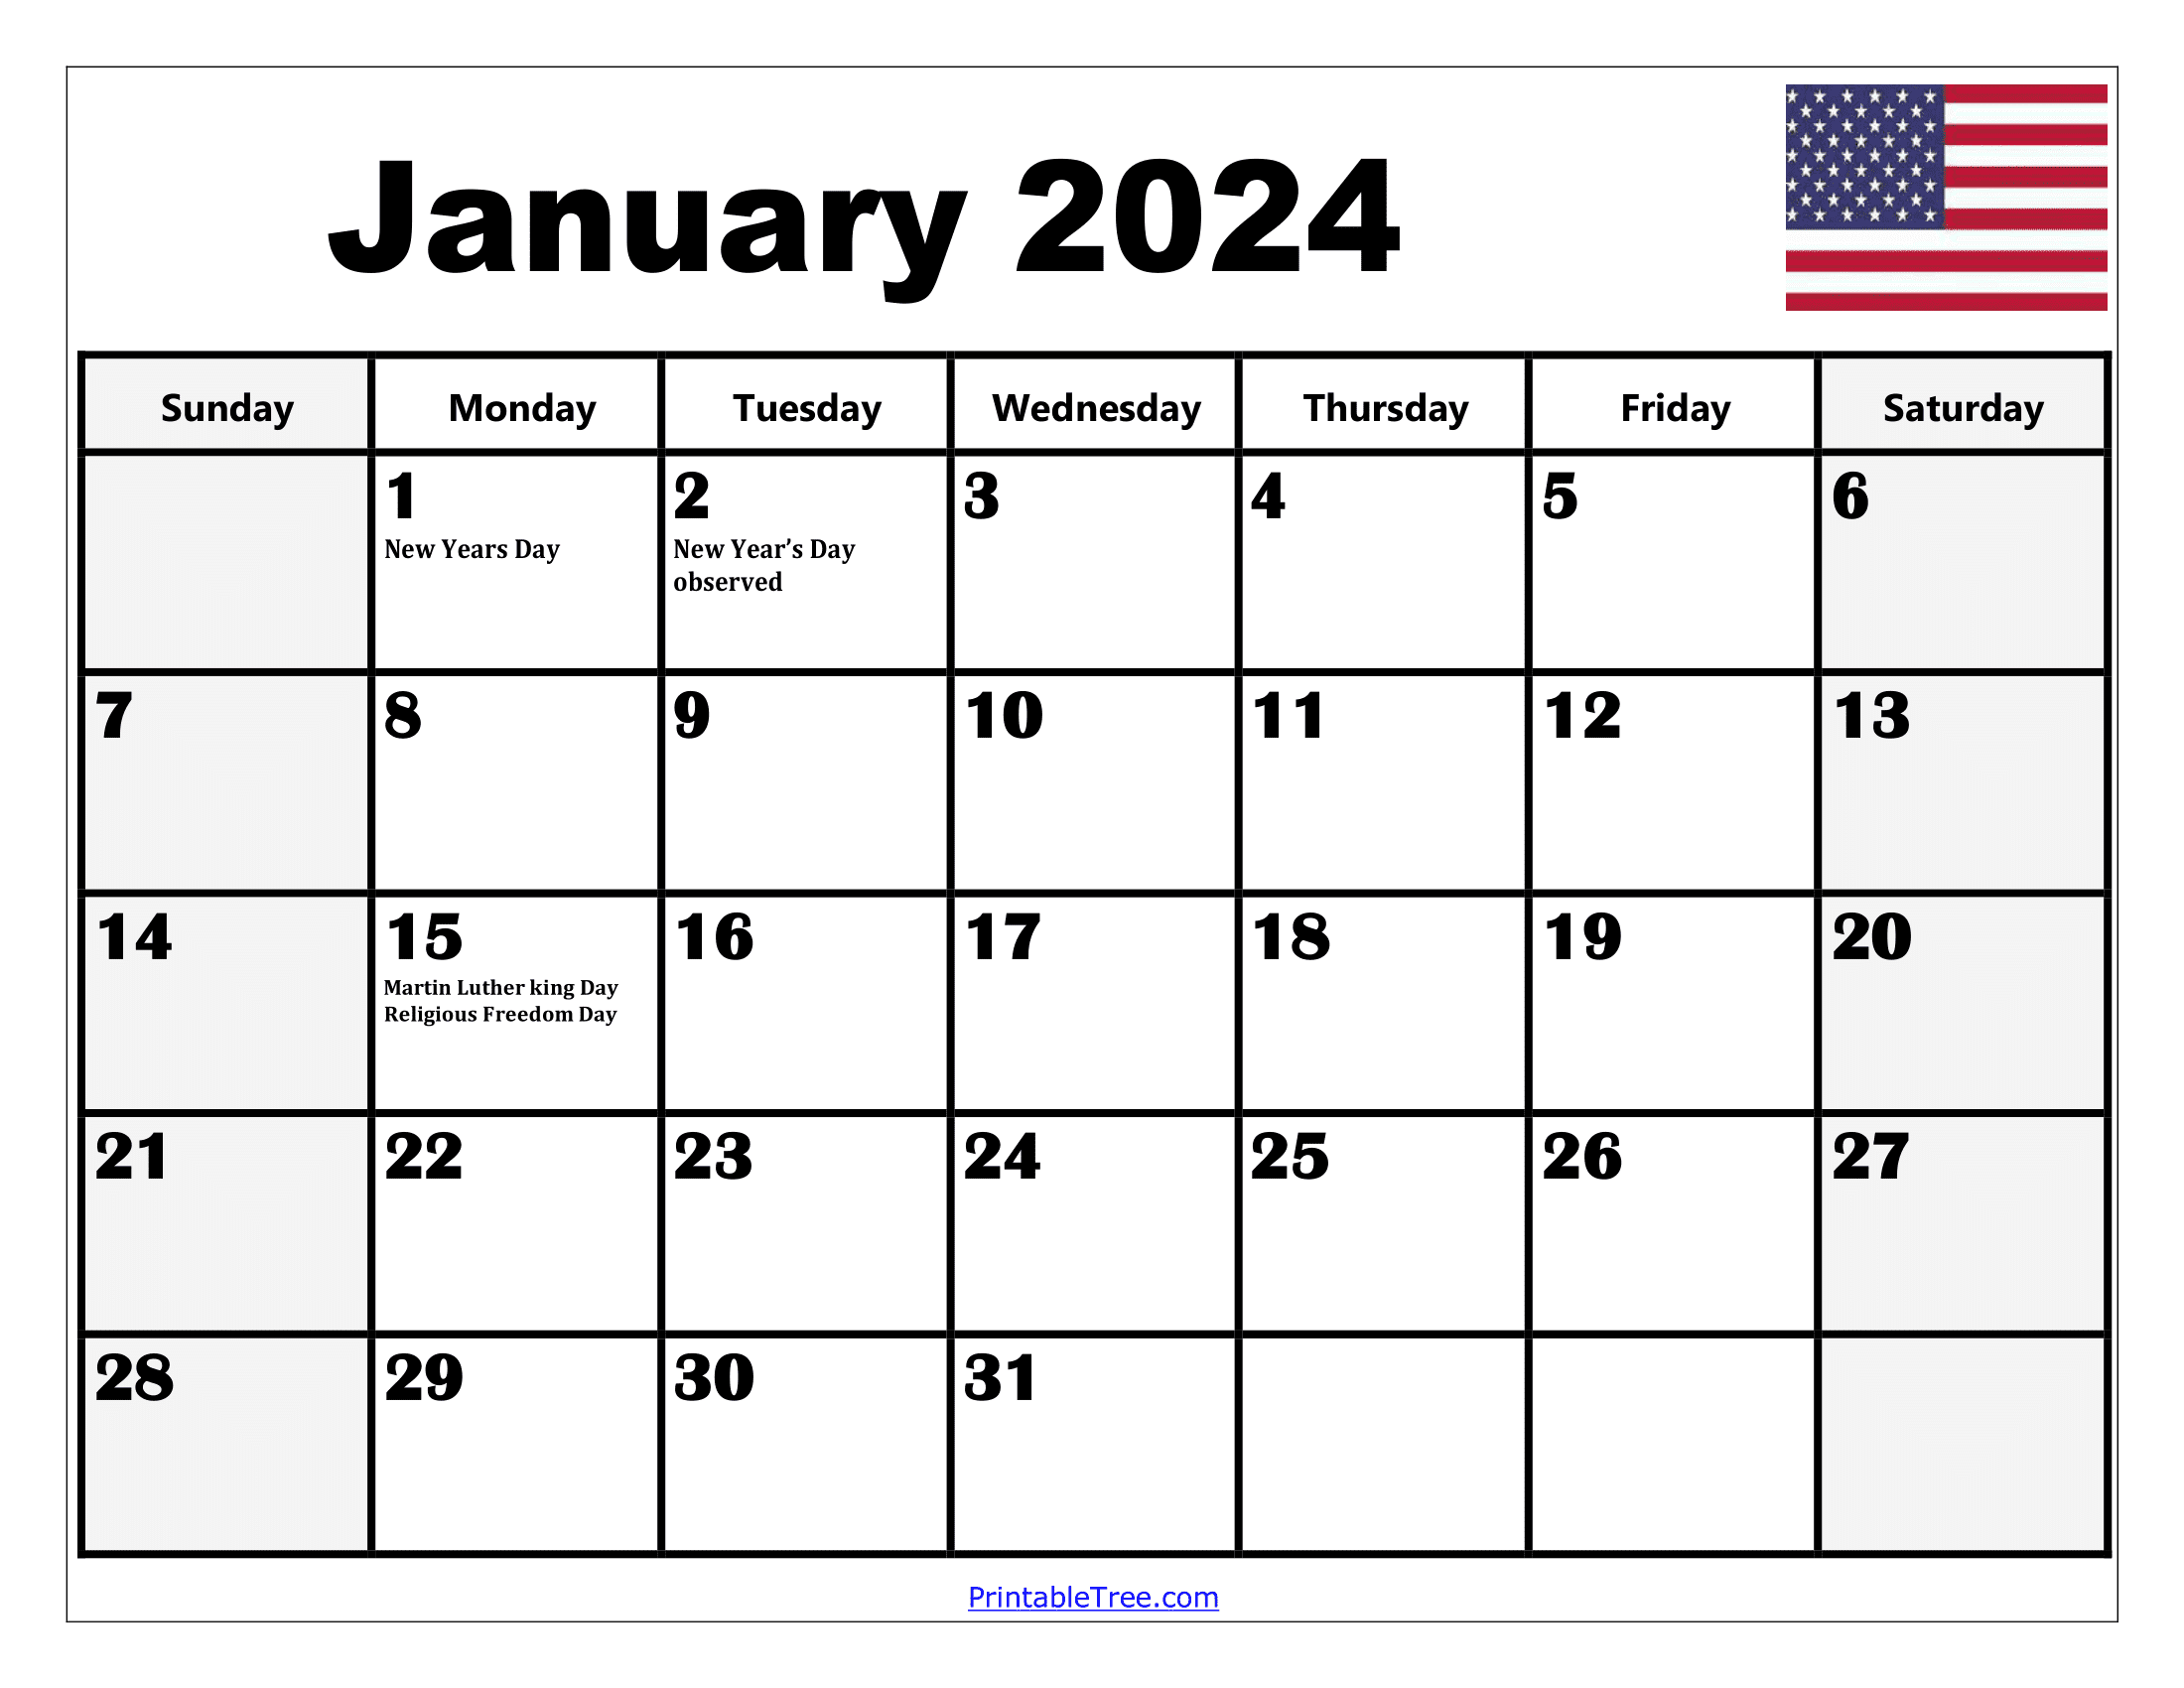 January 2024 Calendar Printable Pdf Template With Holidays for Monthly Printable Calendar 2024 With Holidays